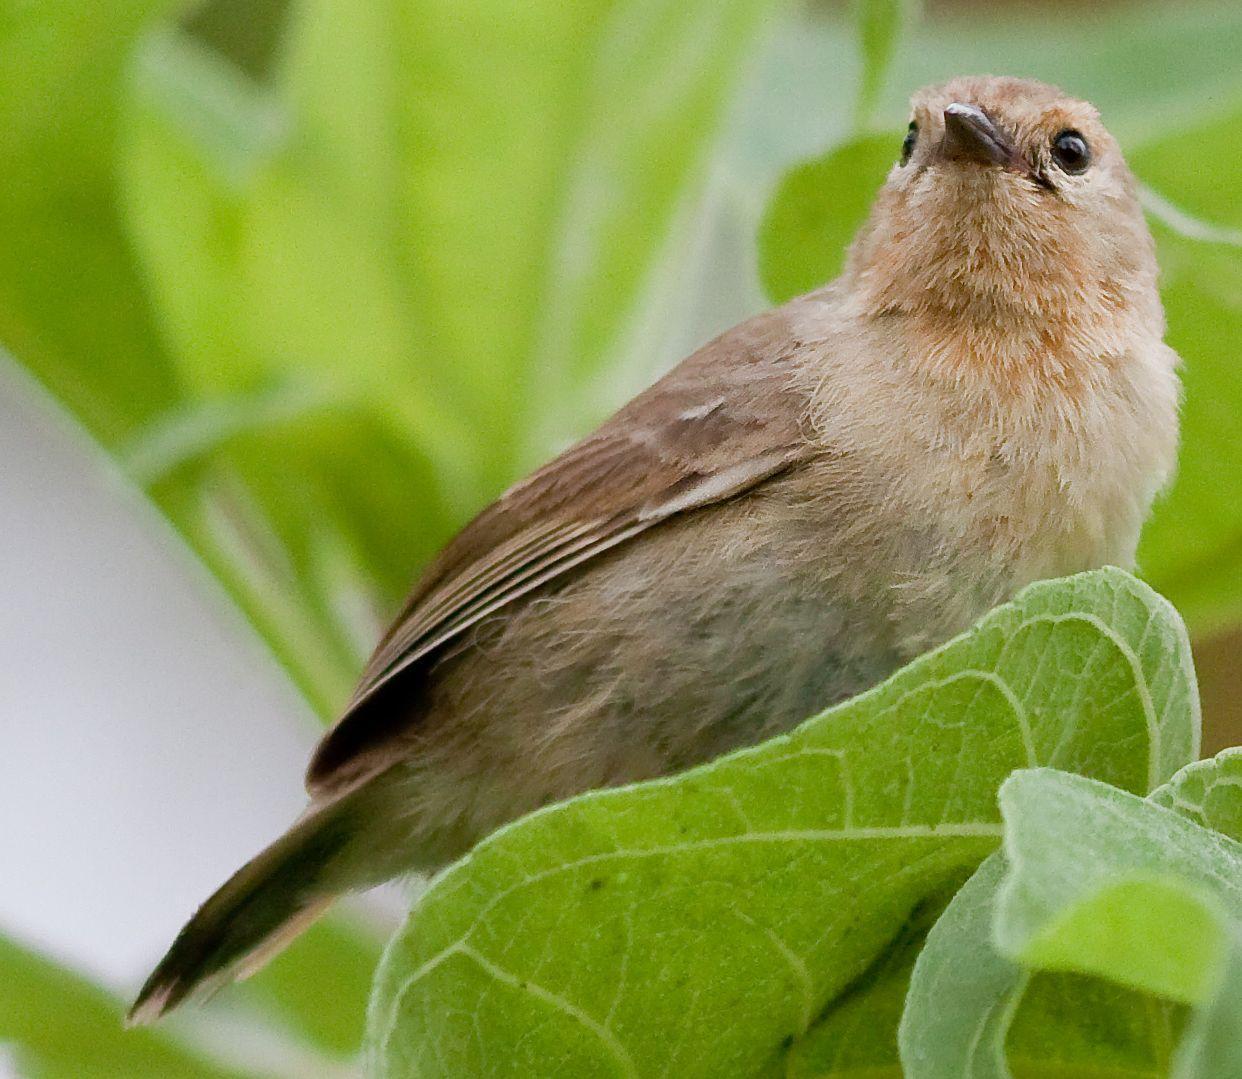 Green Warbler-Finch Photo by Michi Dvorak